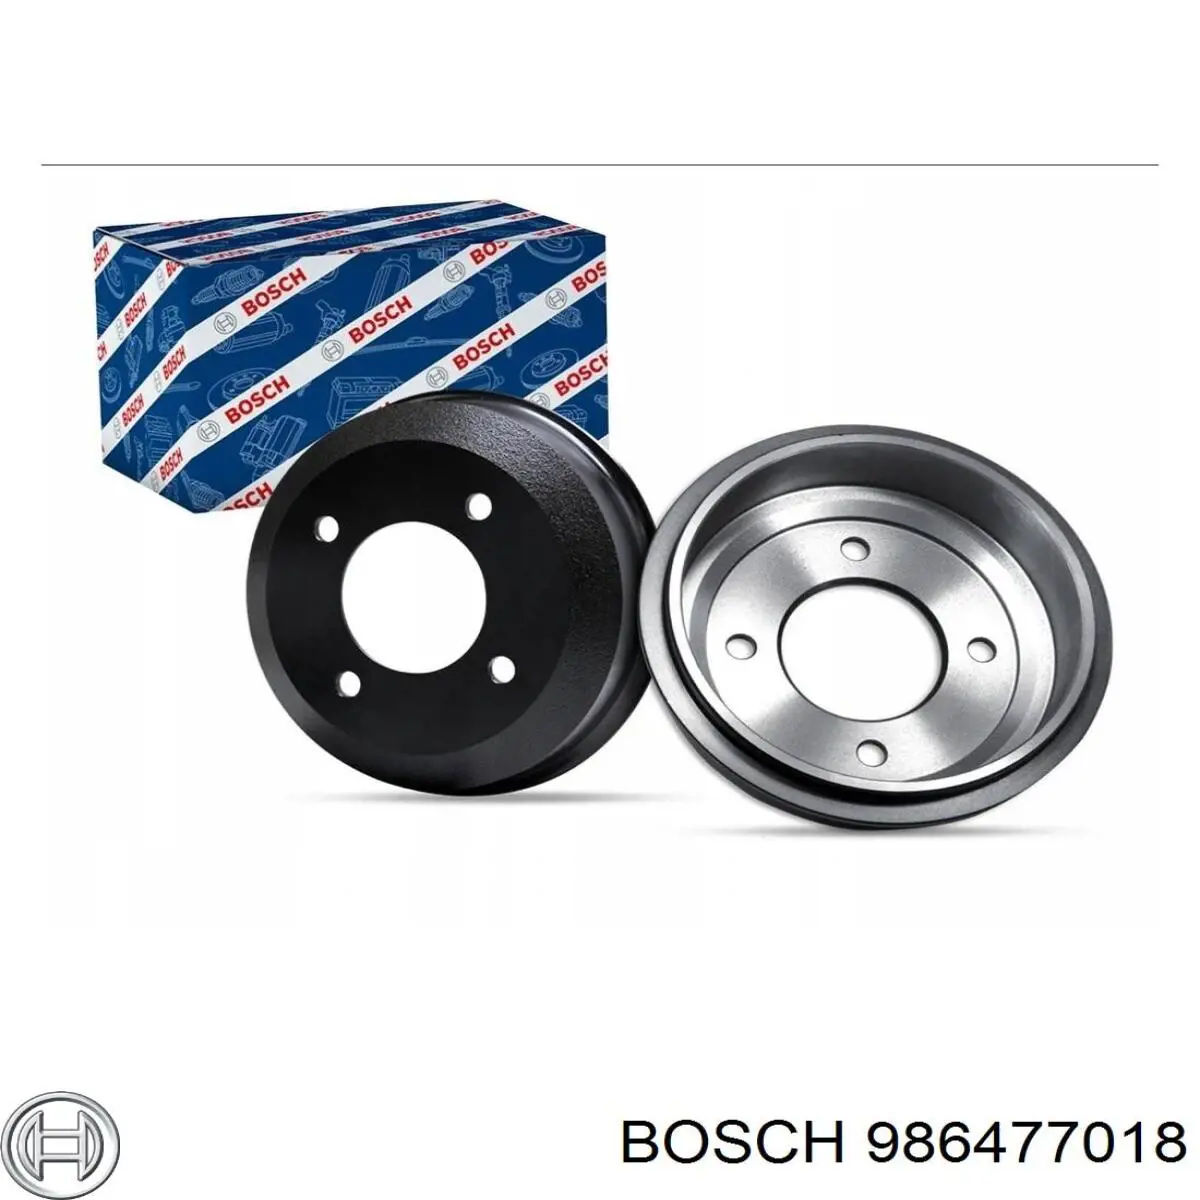 986477018 Bosch барабан тормозной задний